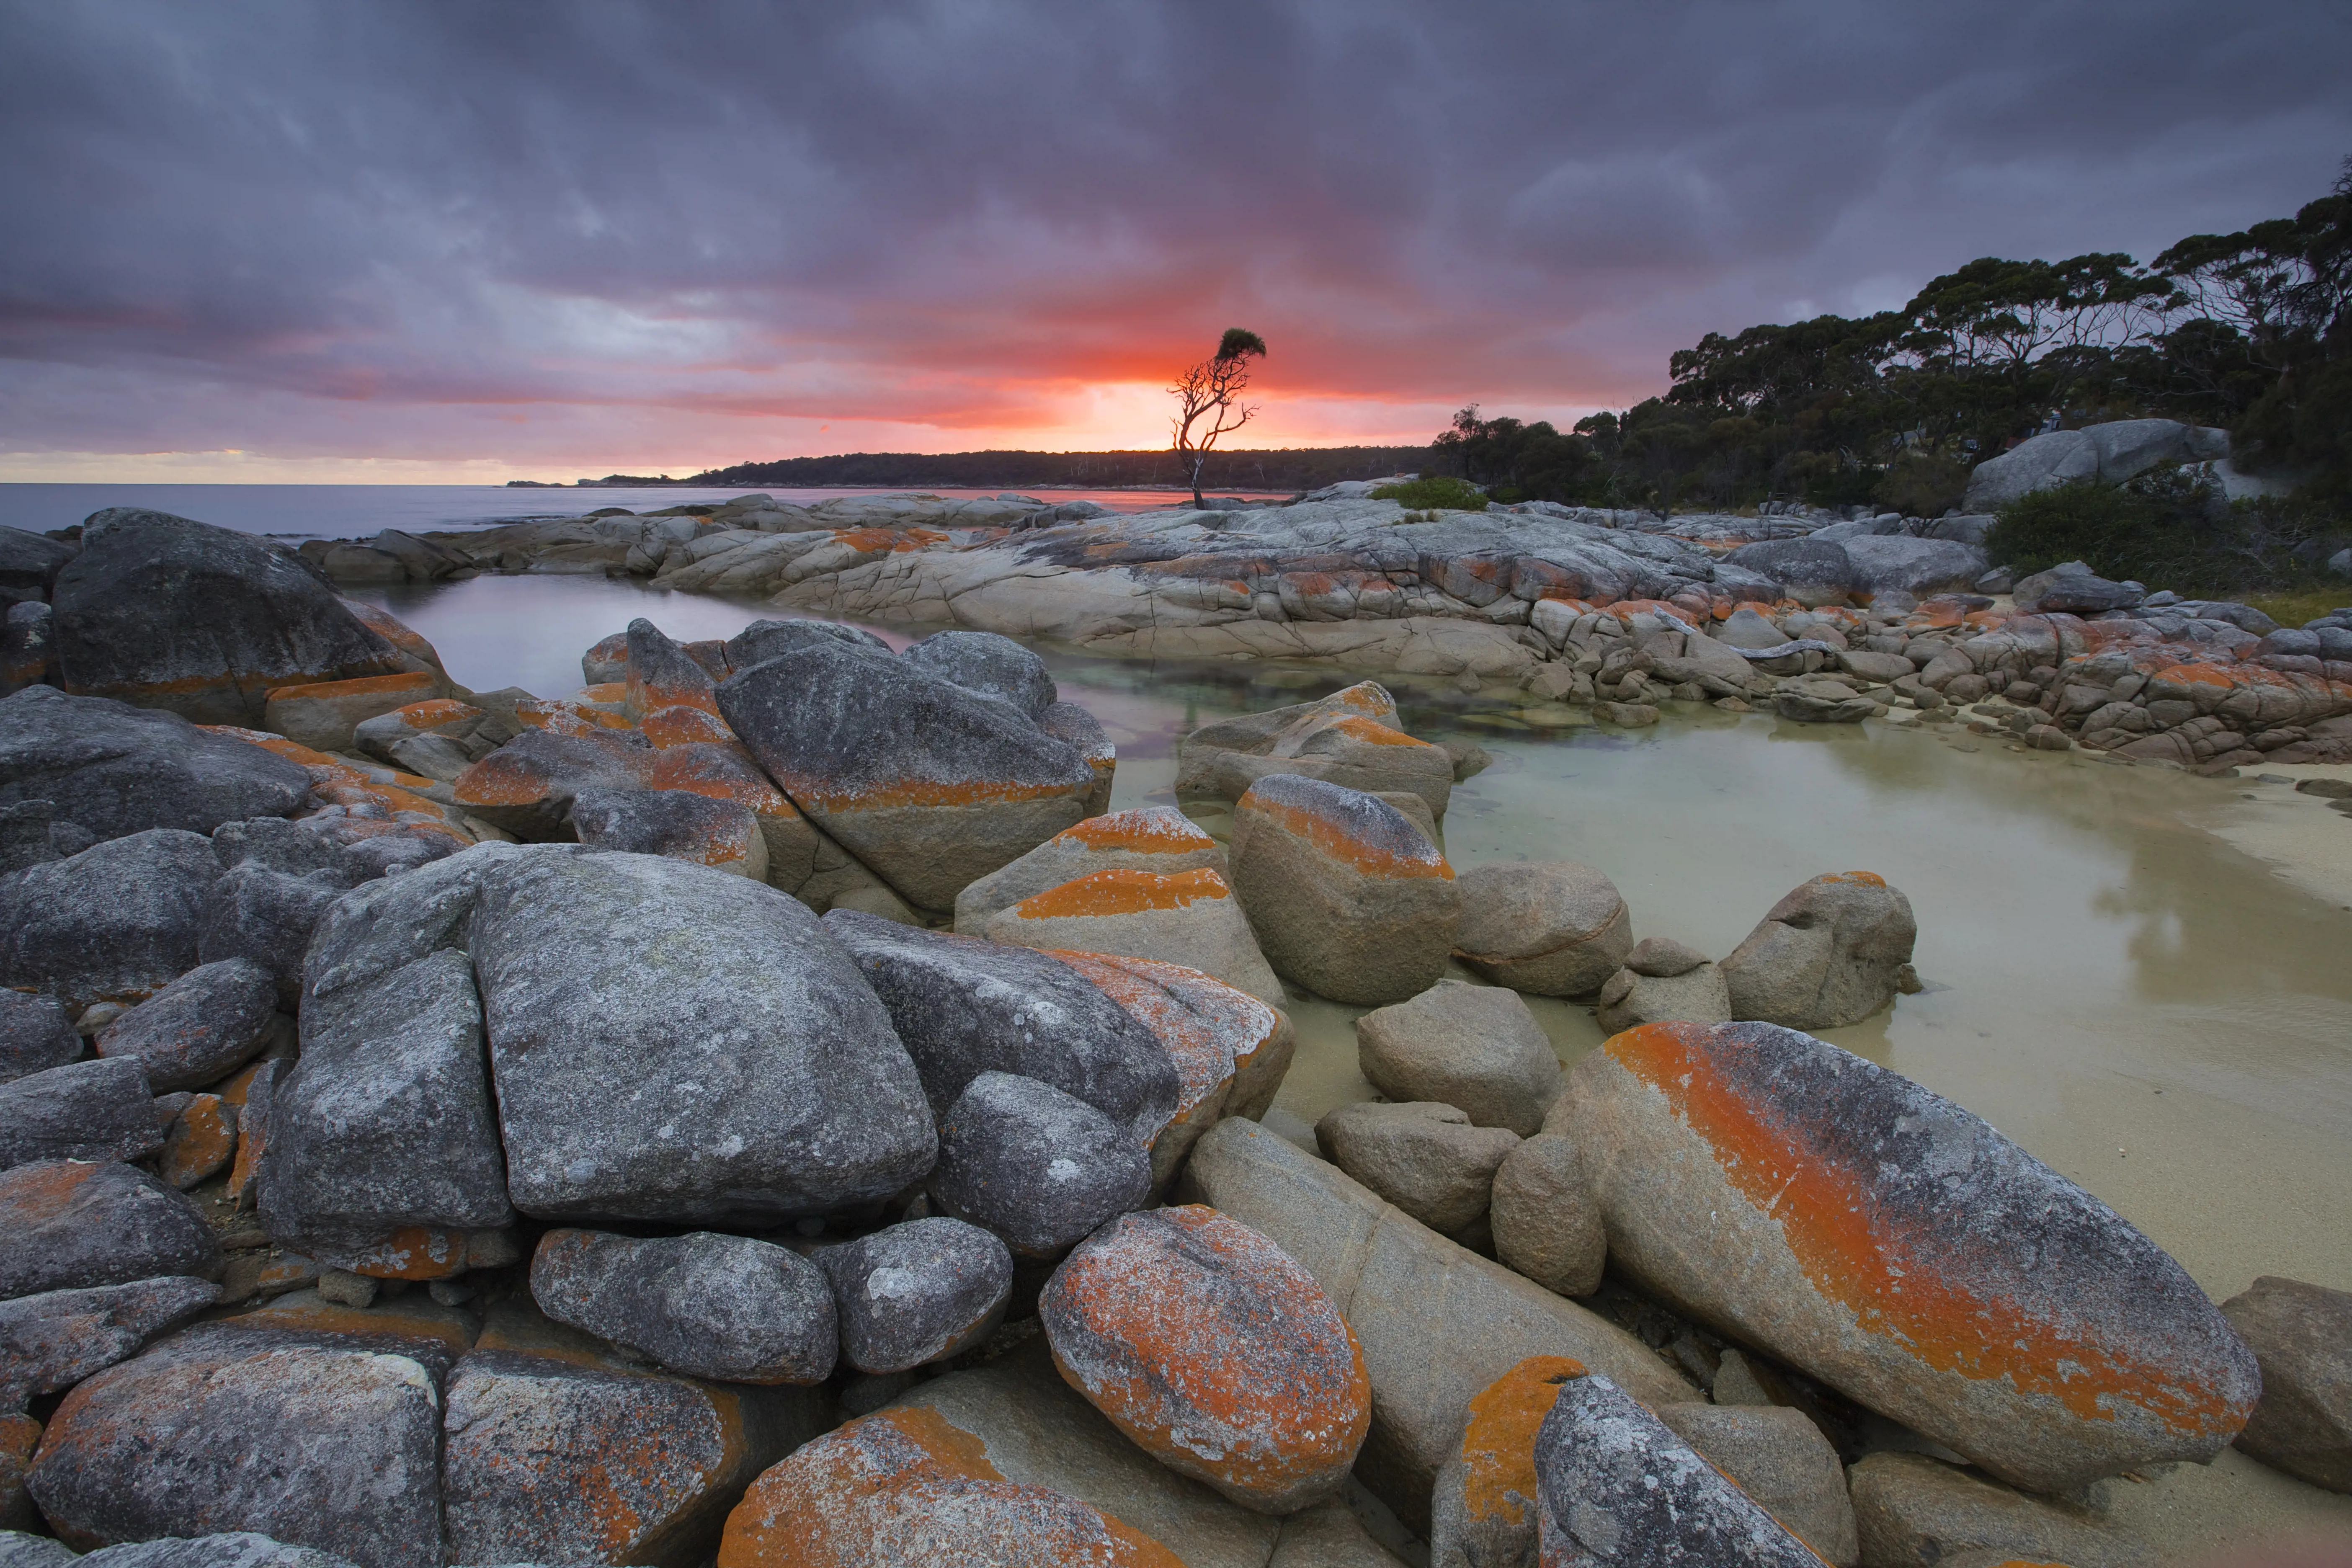 Coastline with orange lichen covered rocks and sunrise in the background